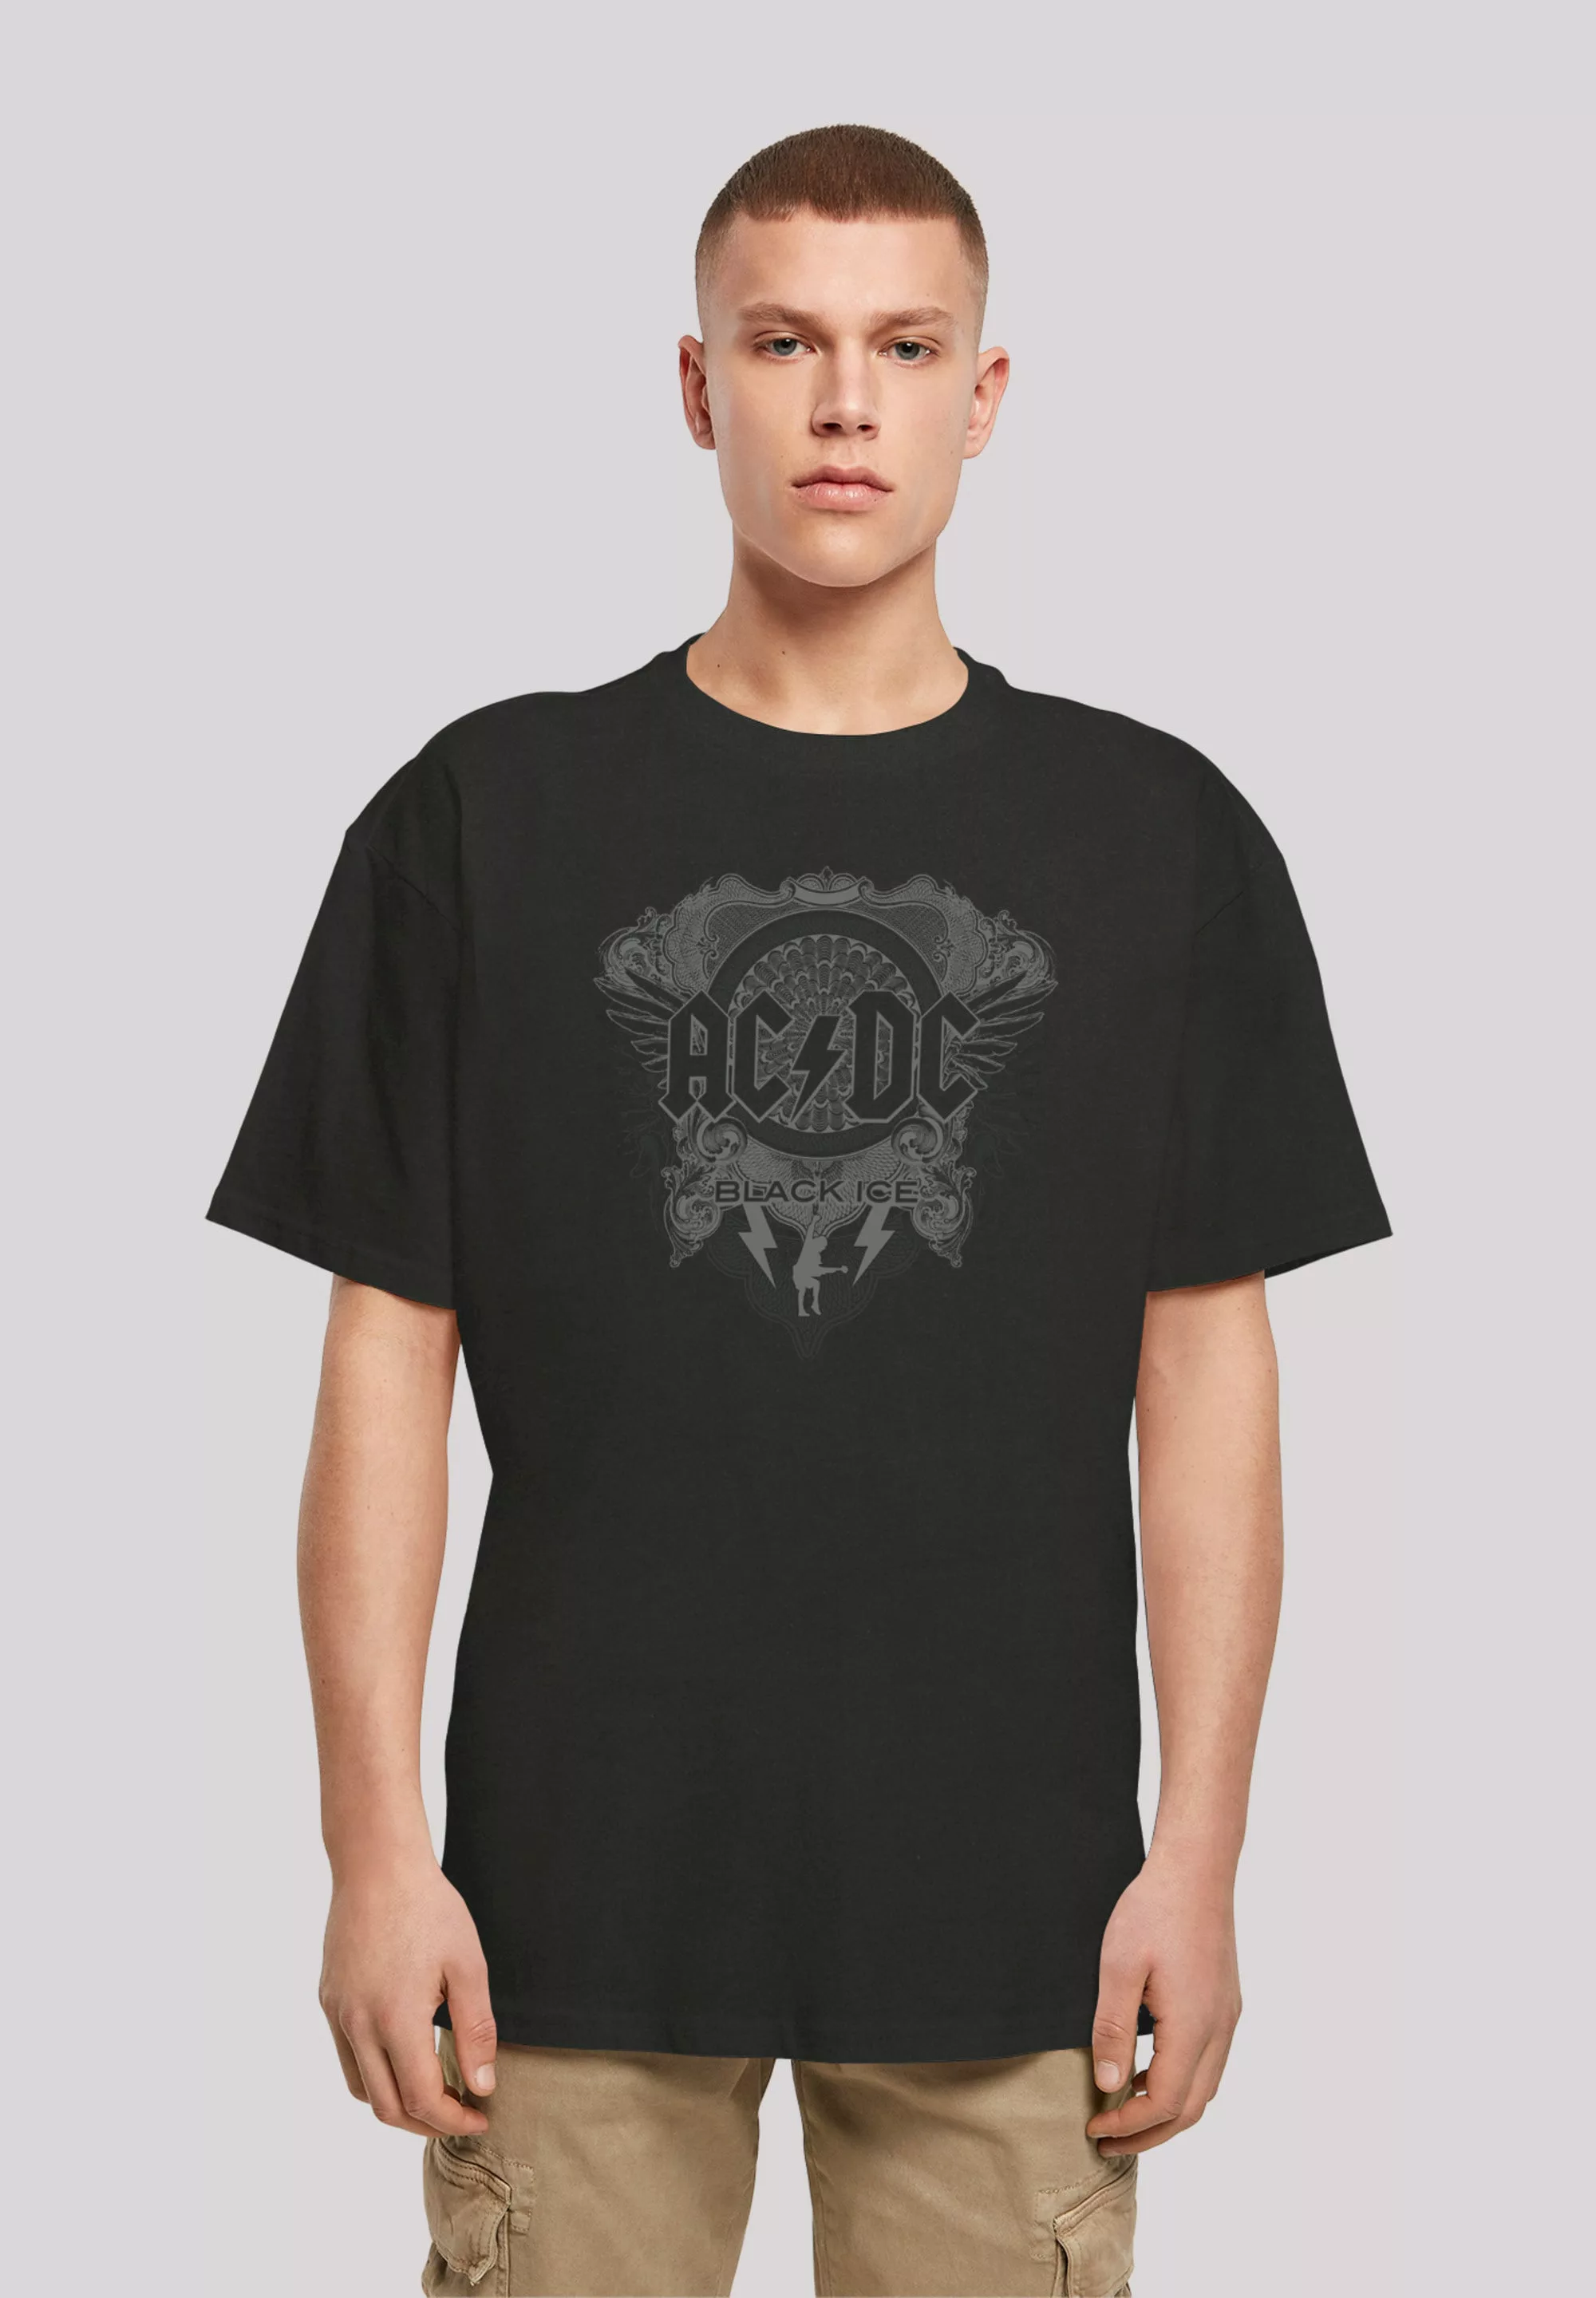 F4NT4STIC T-Shirt "ACDC Rock Band Black Ice", Print günstig online kaufen